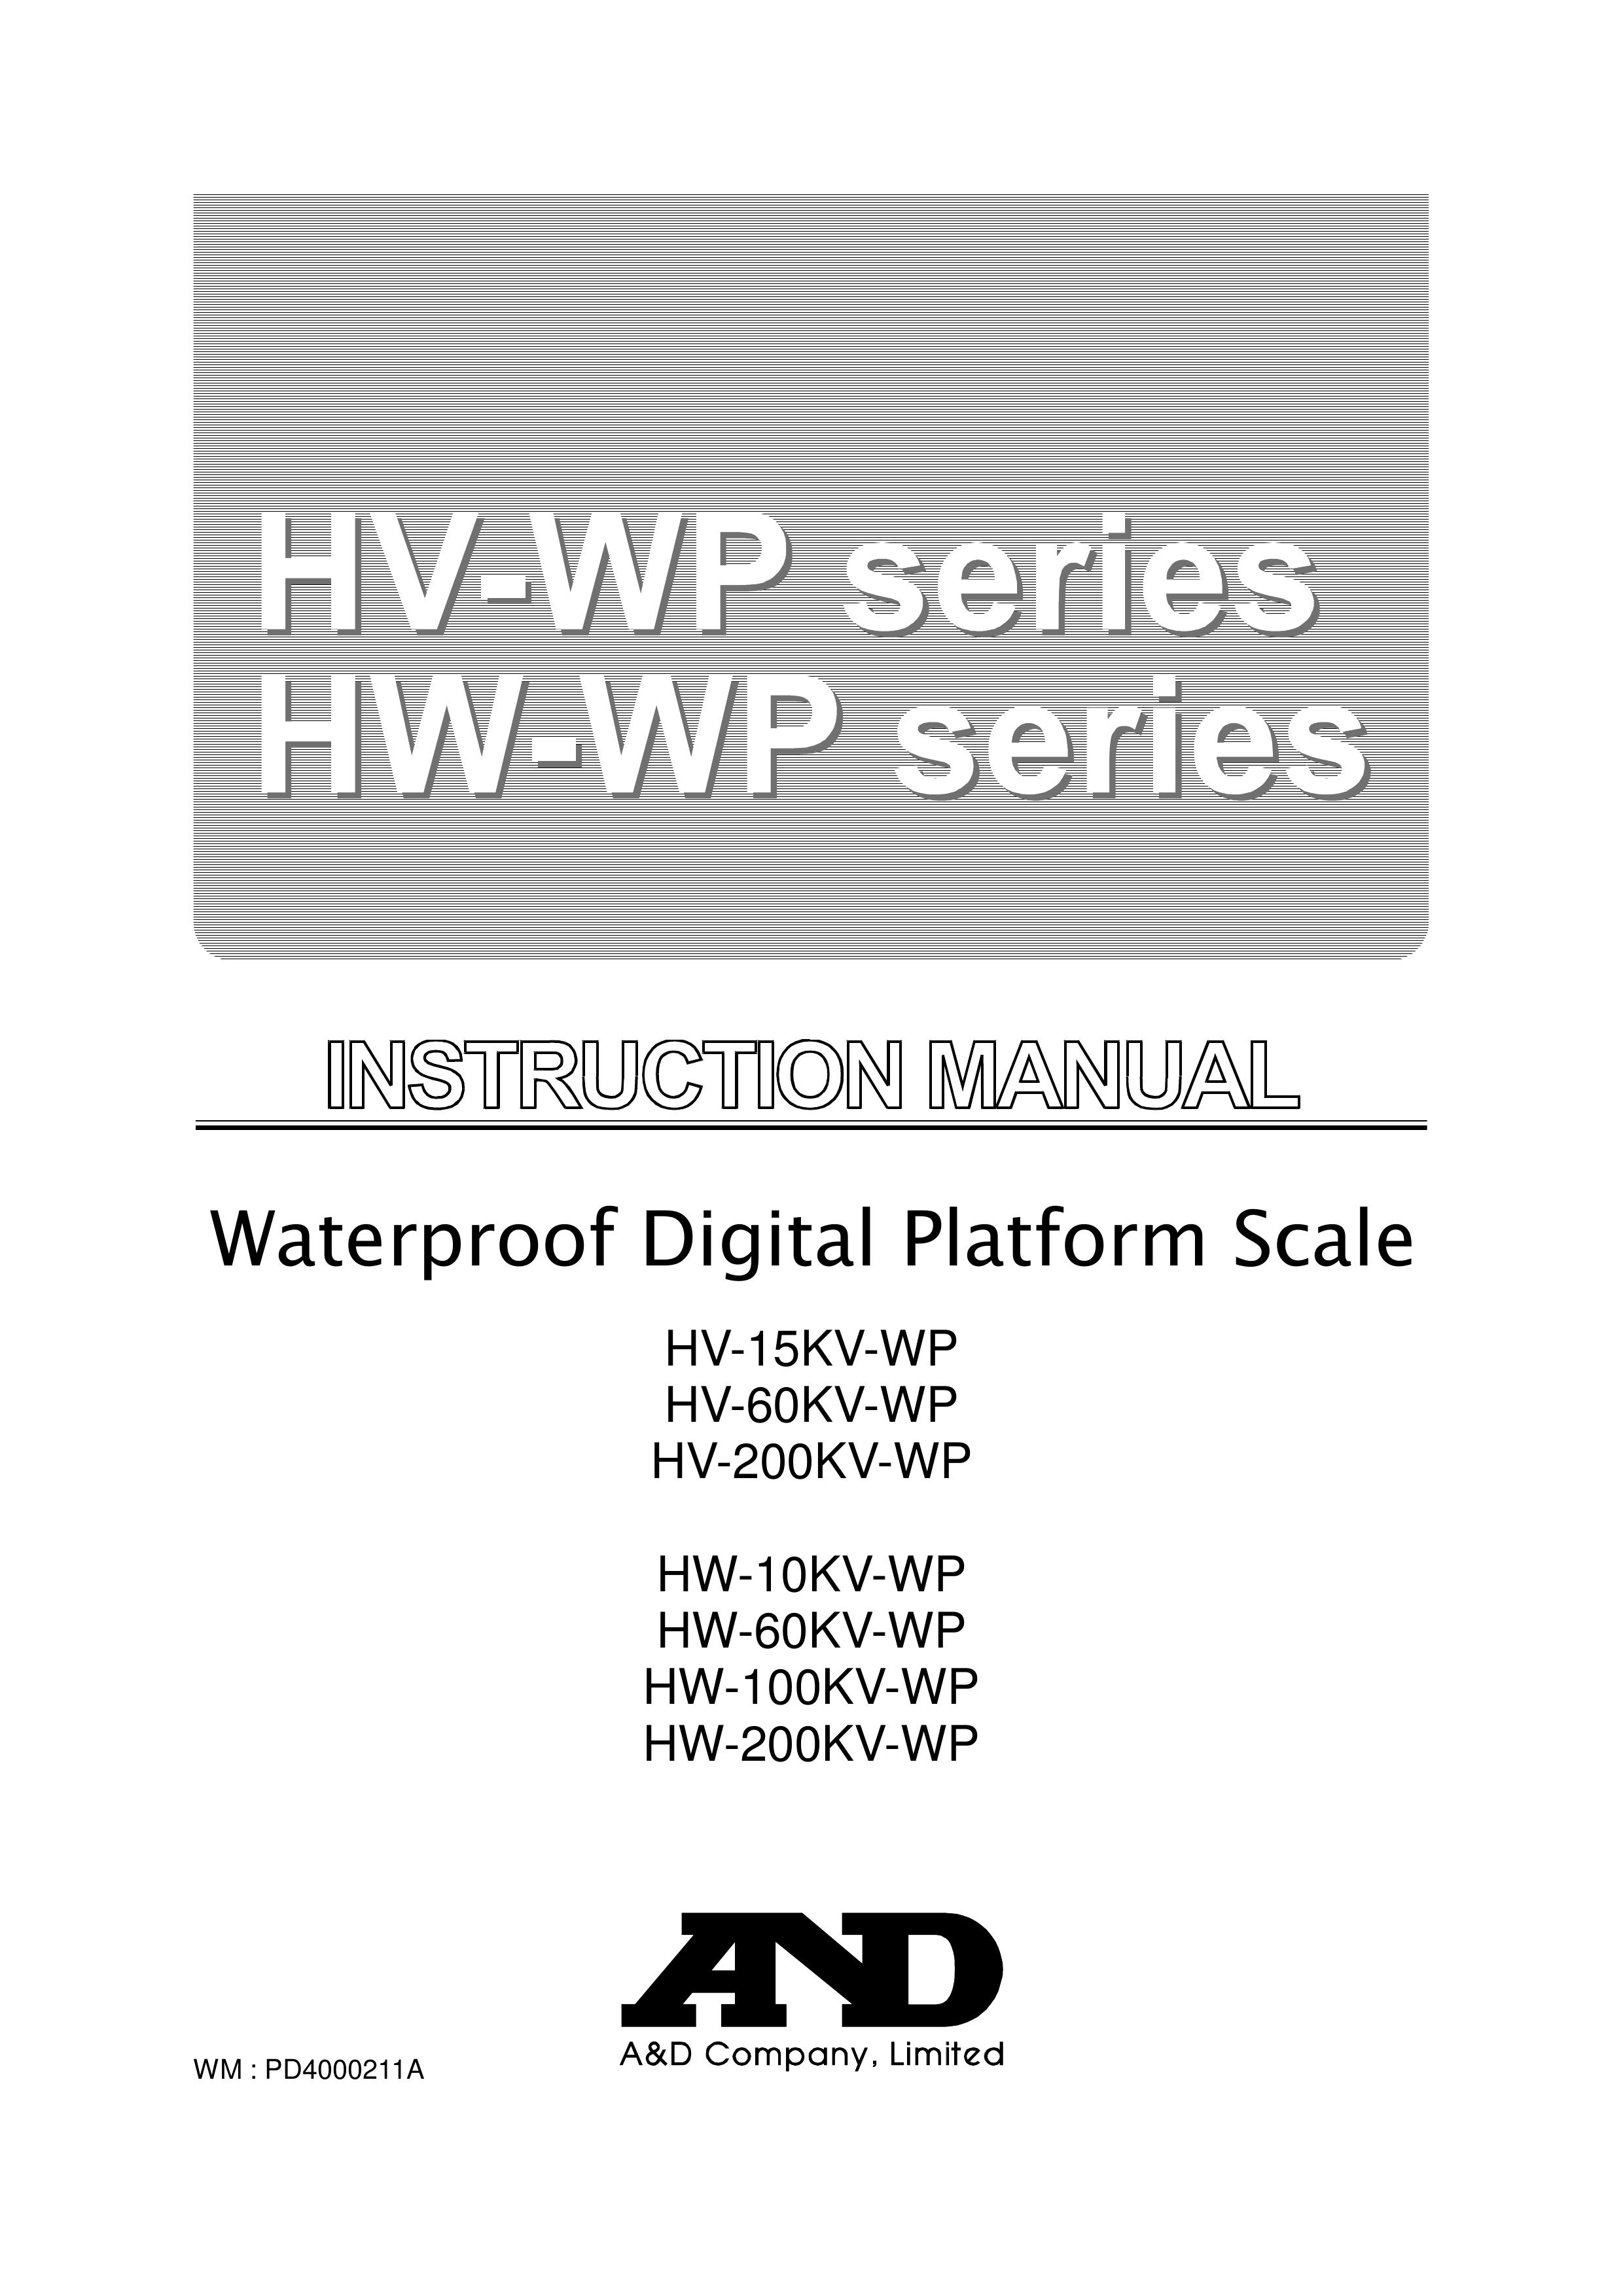 A&D HW-100KV-WP Scale User Manual